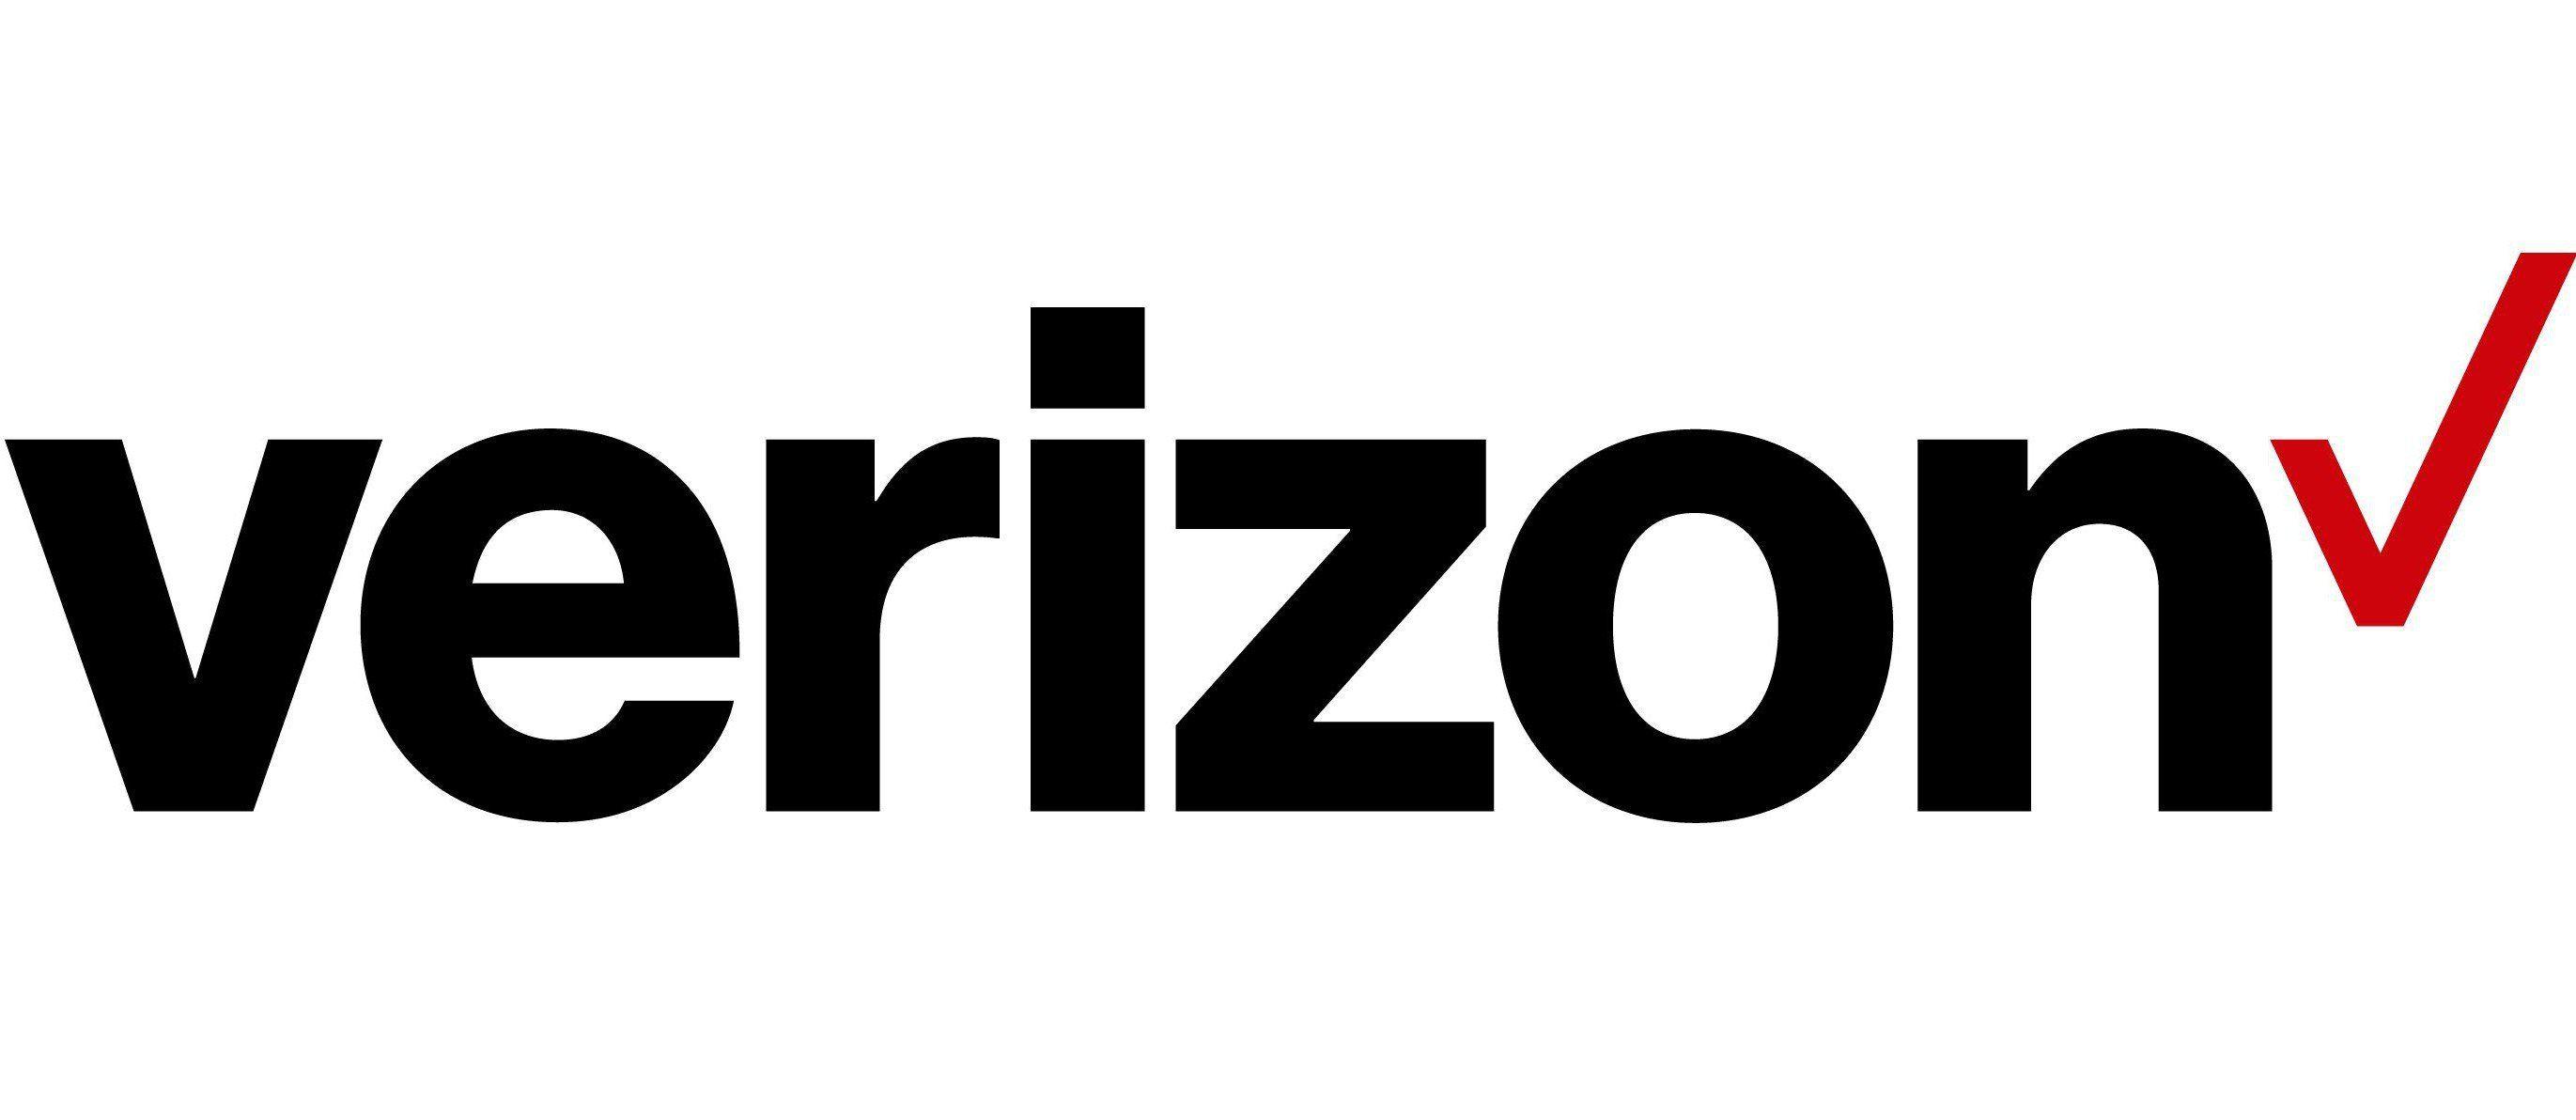 Google Verizon Logo - T-Mobile CEO mocks new Verizon logo | KFOR.com